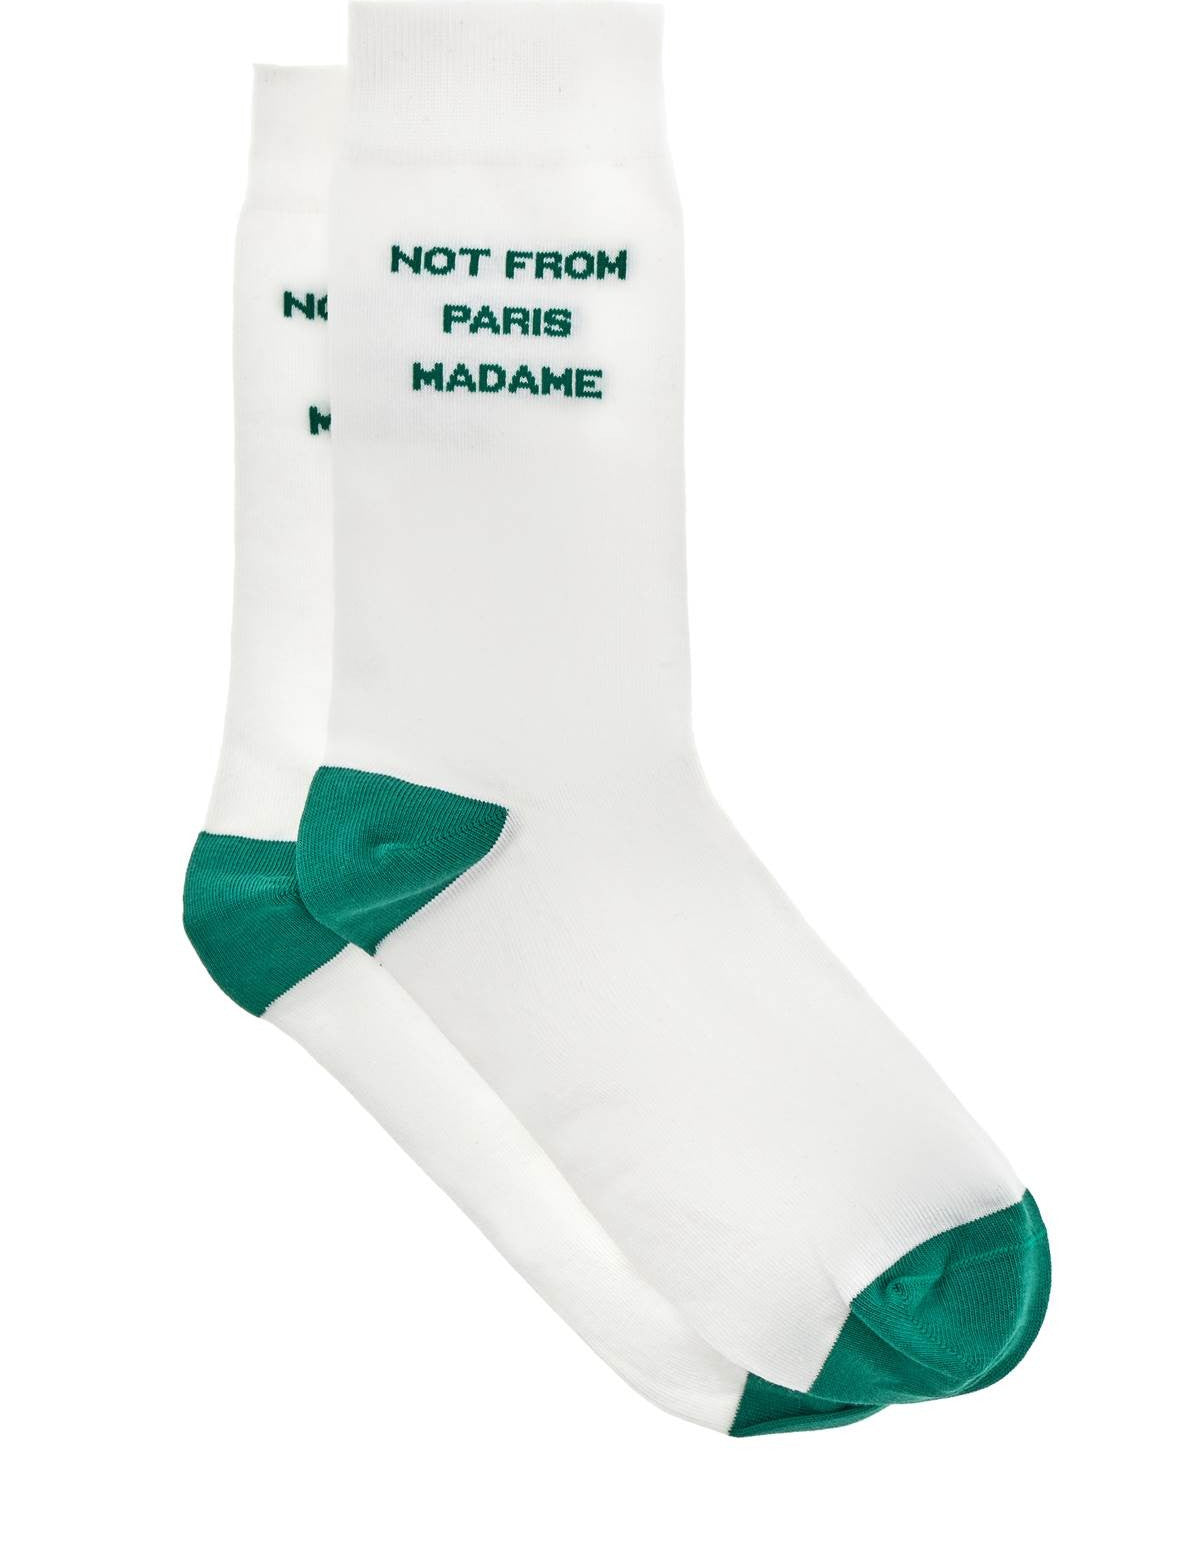 drole-de-monsieur-la-chaussette-slogan-socks.jpg